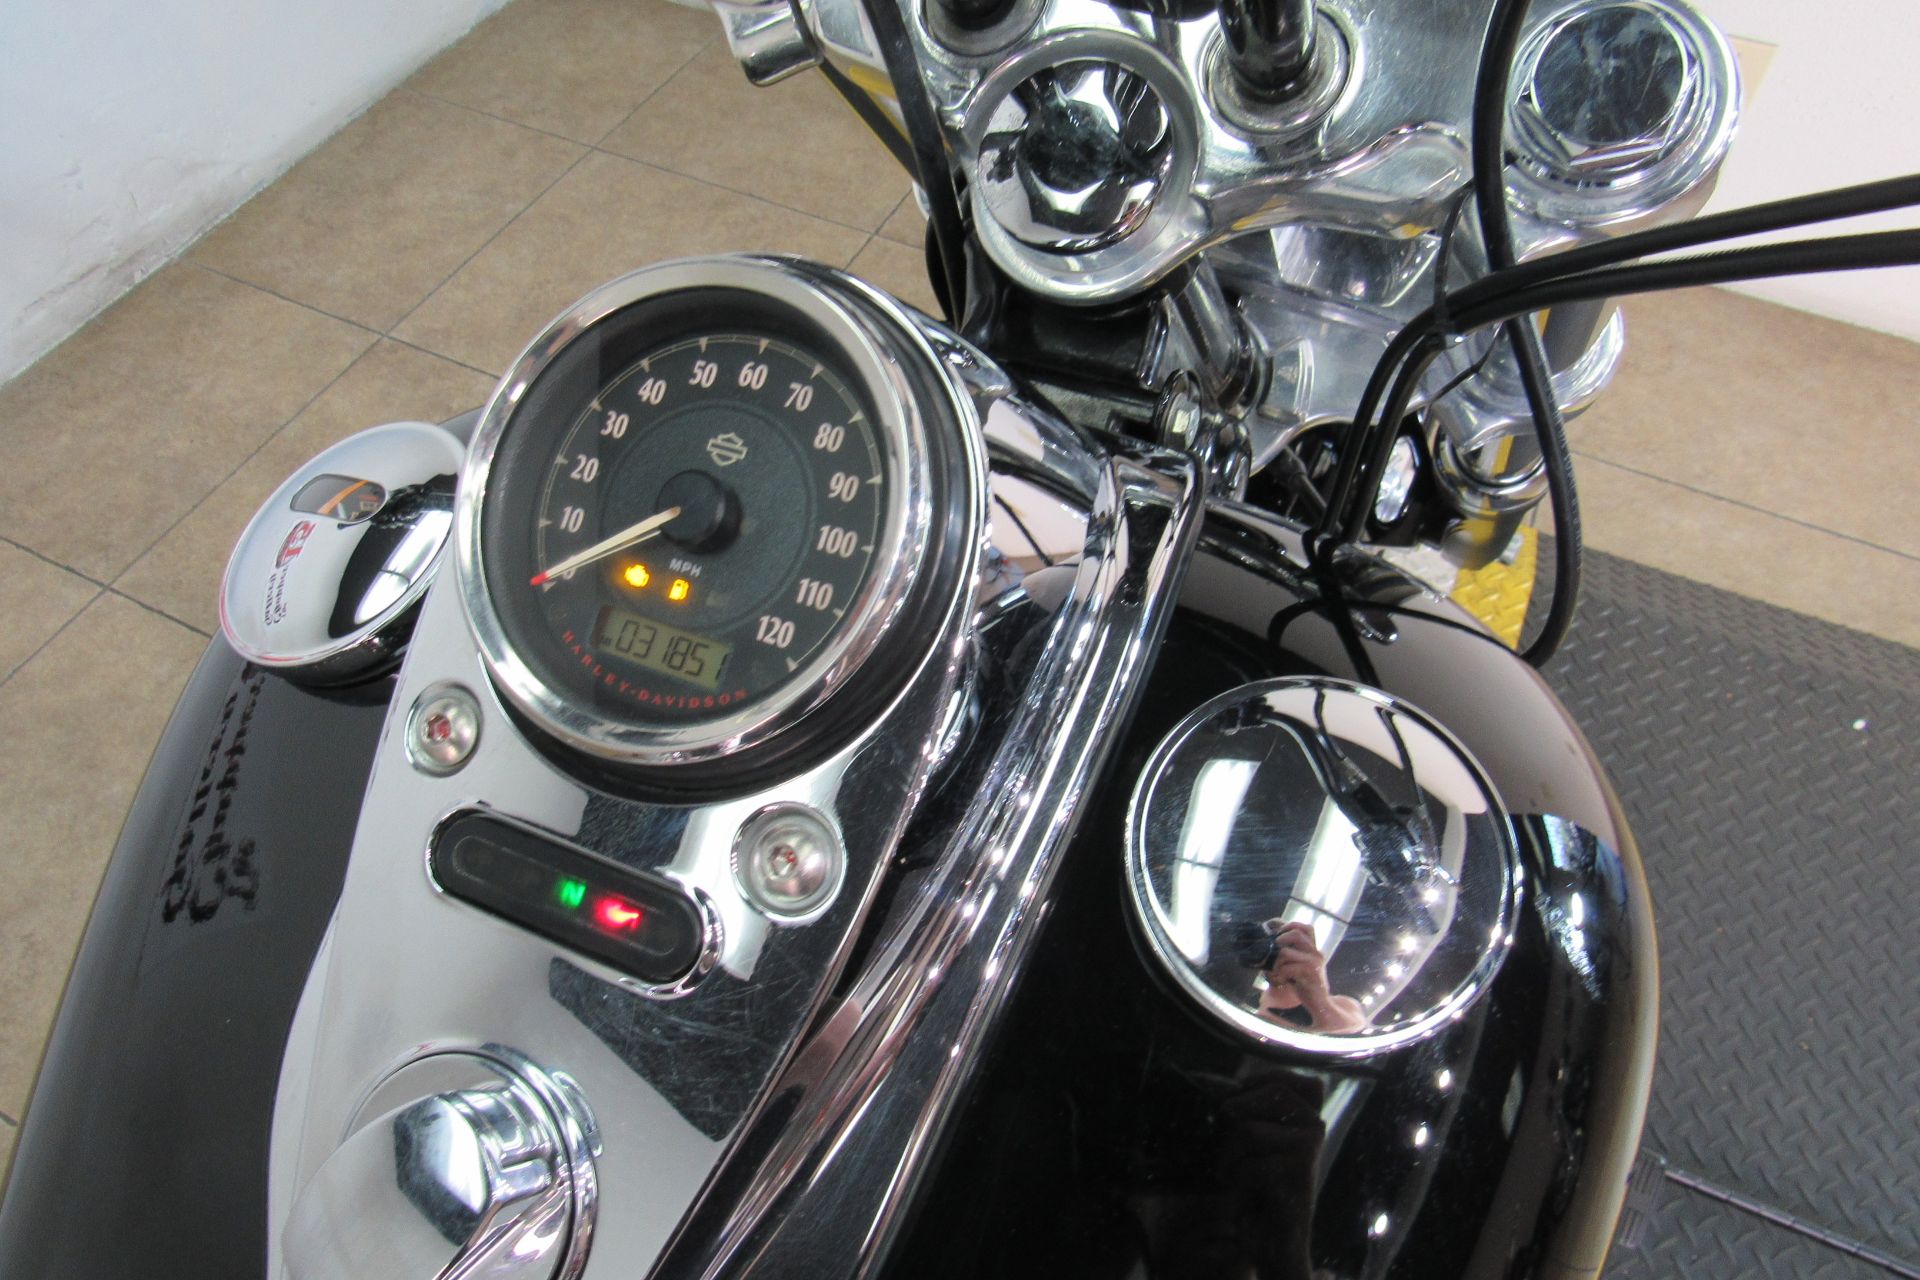 2014 Harley-Davidson Dyna® Wide Glide® in Temecula, California - Photo 25